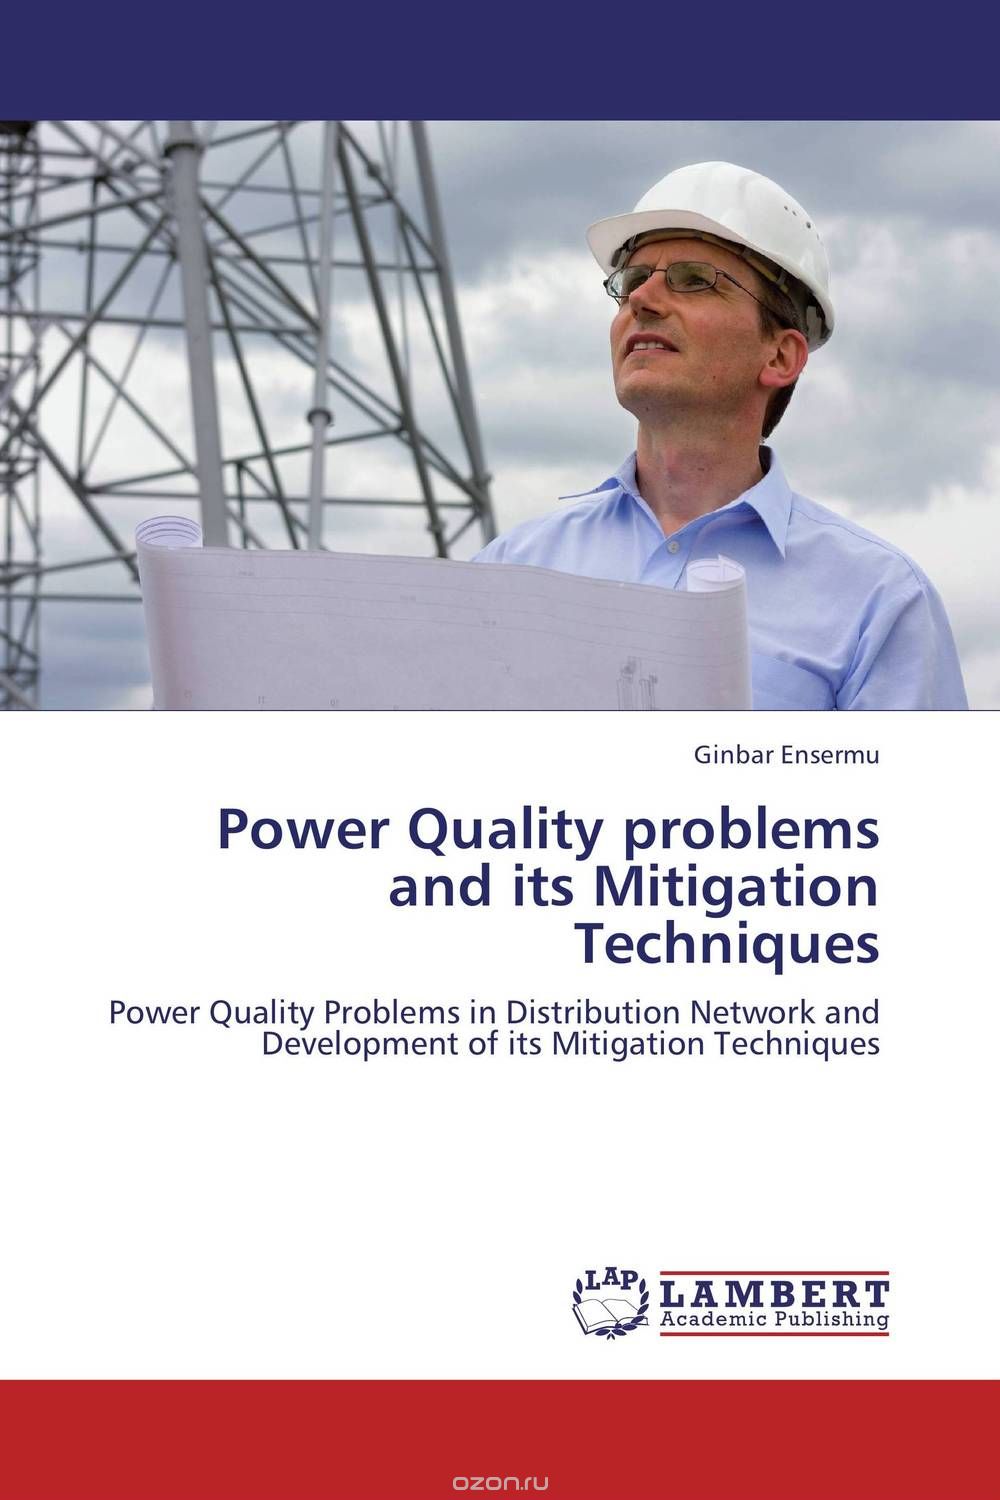 Скачать книгу "Power Quality problems and its Mitigation Techniques"